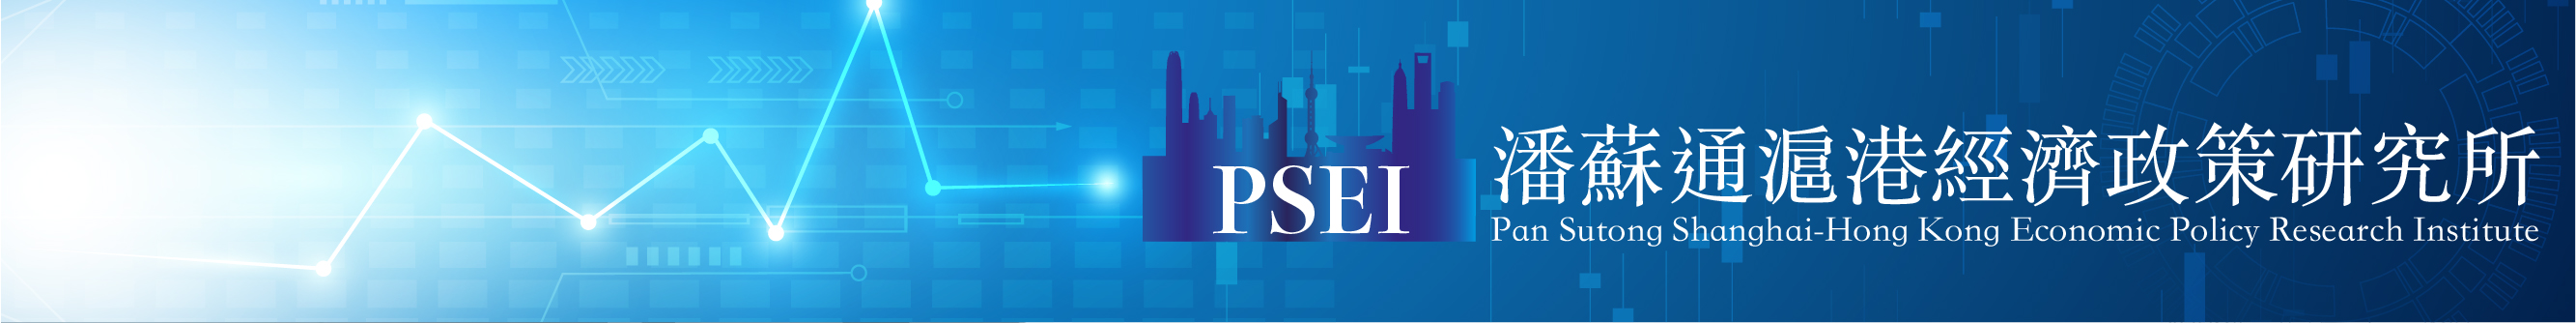 Pan Sutong Shanghai-Hong Kong Economic Policy Research Institute (PSEI)  潘蘇通滬港經濟政策研究所